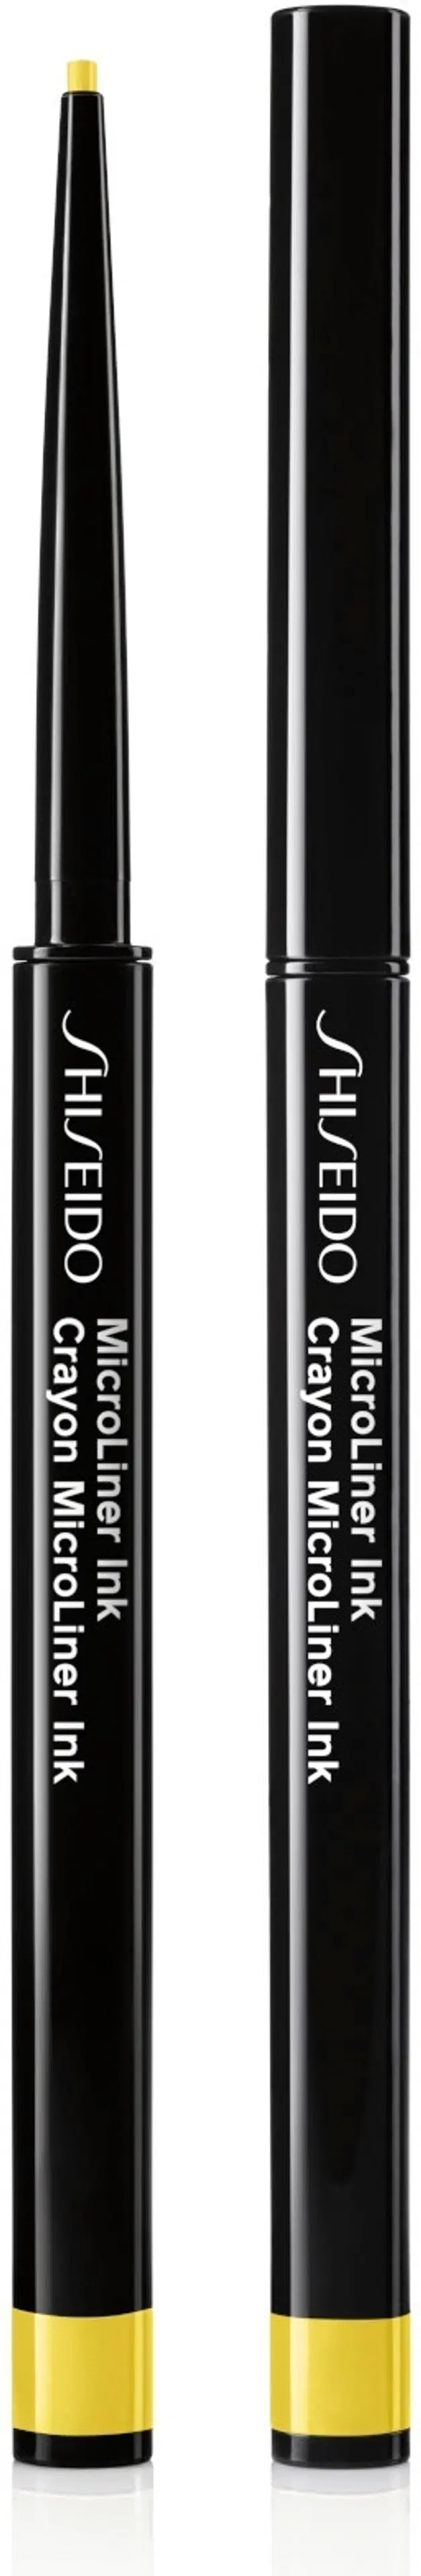 Shiseido MicroLiner Ink silmänrajauskynä 0,08 g